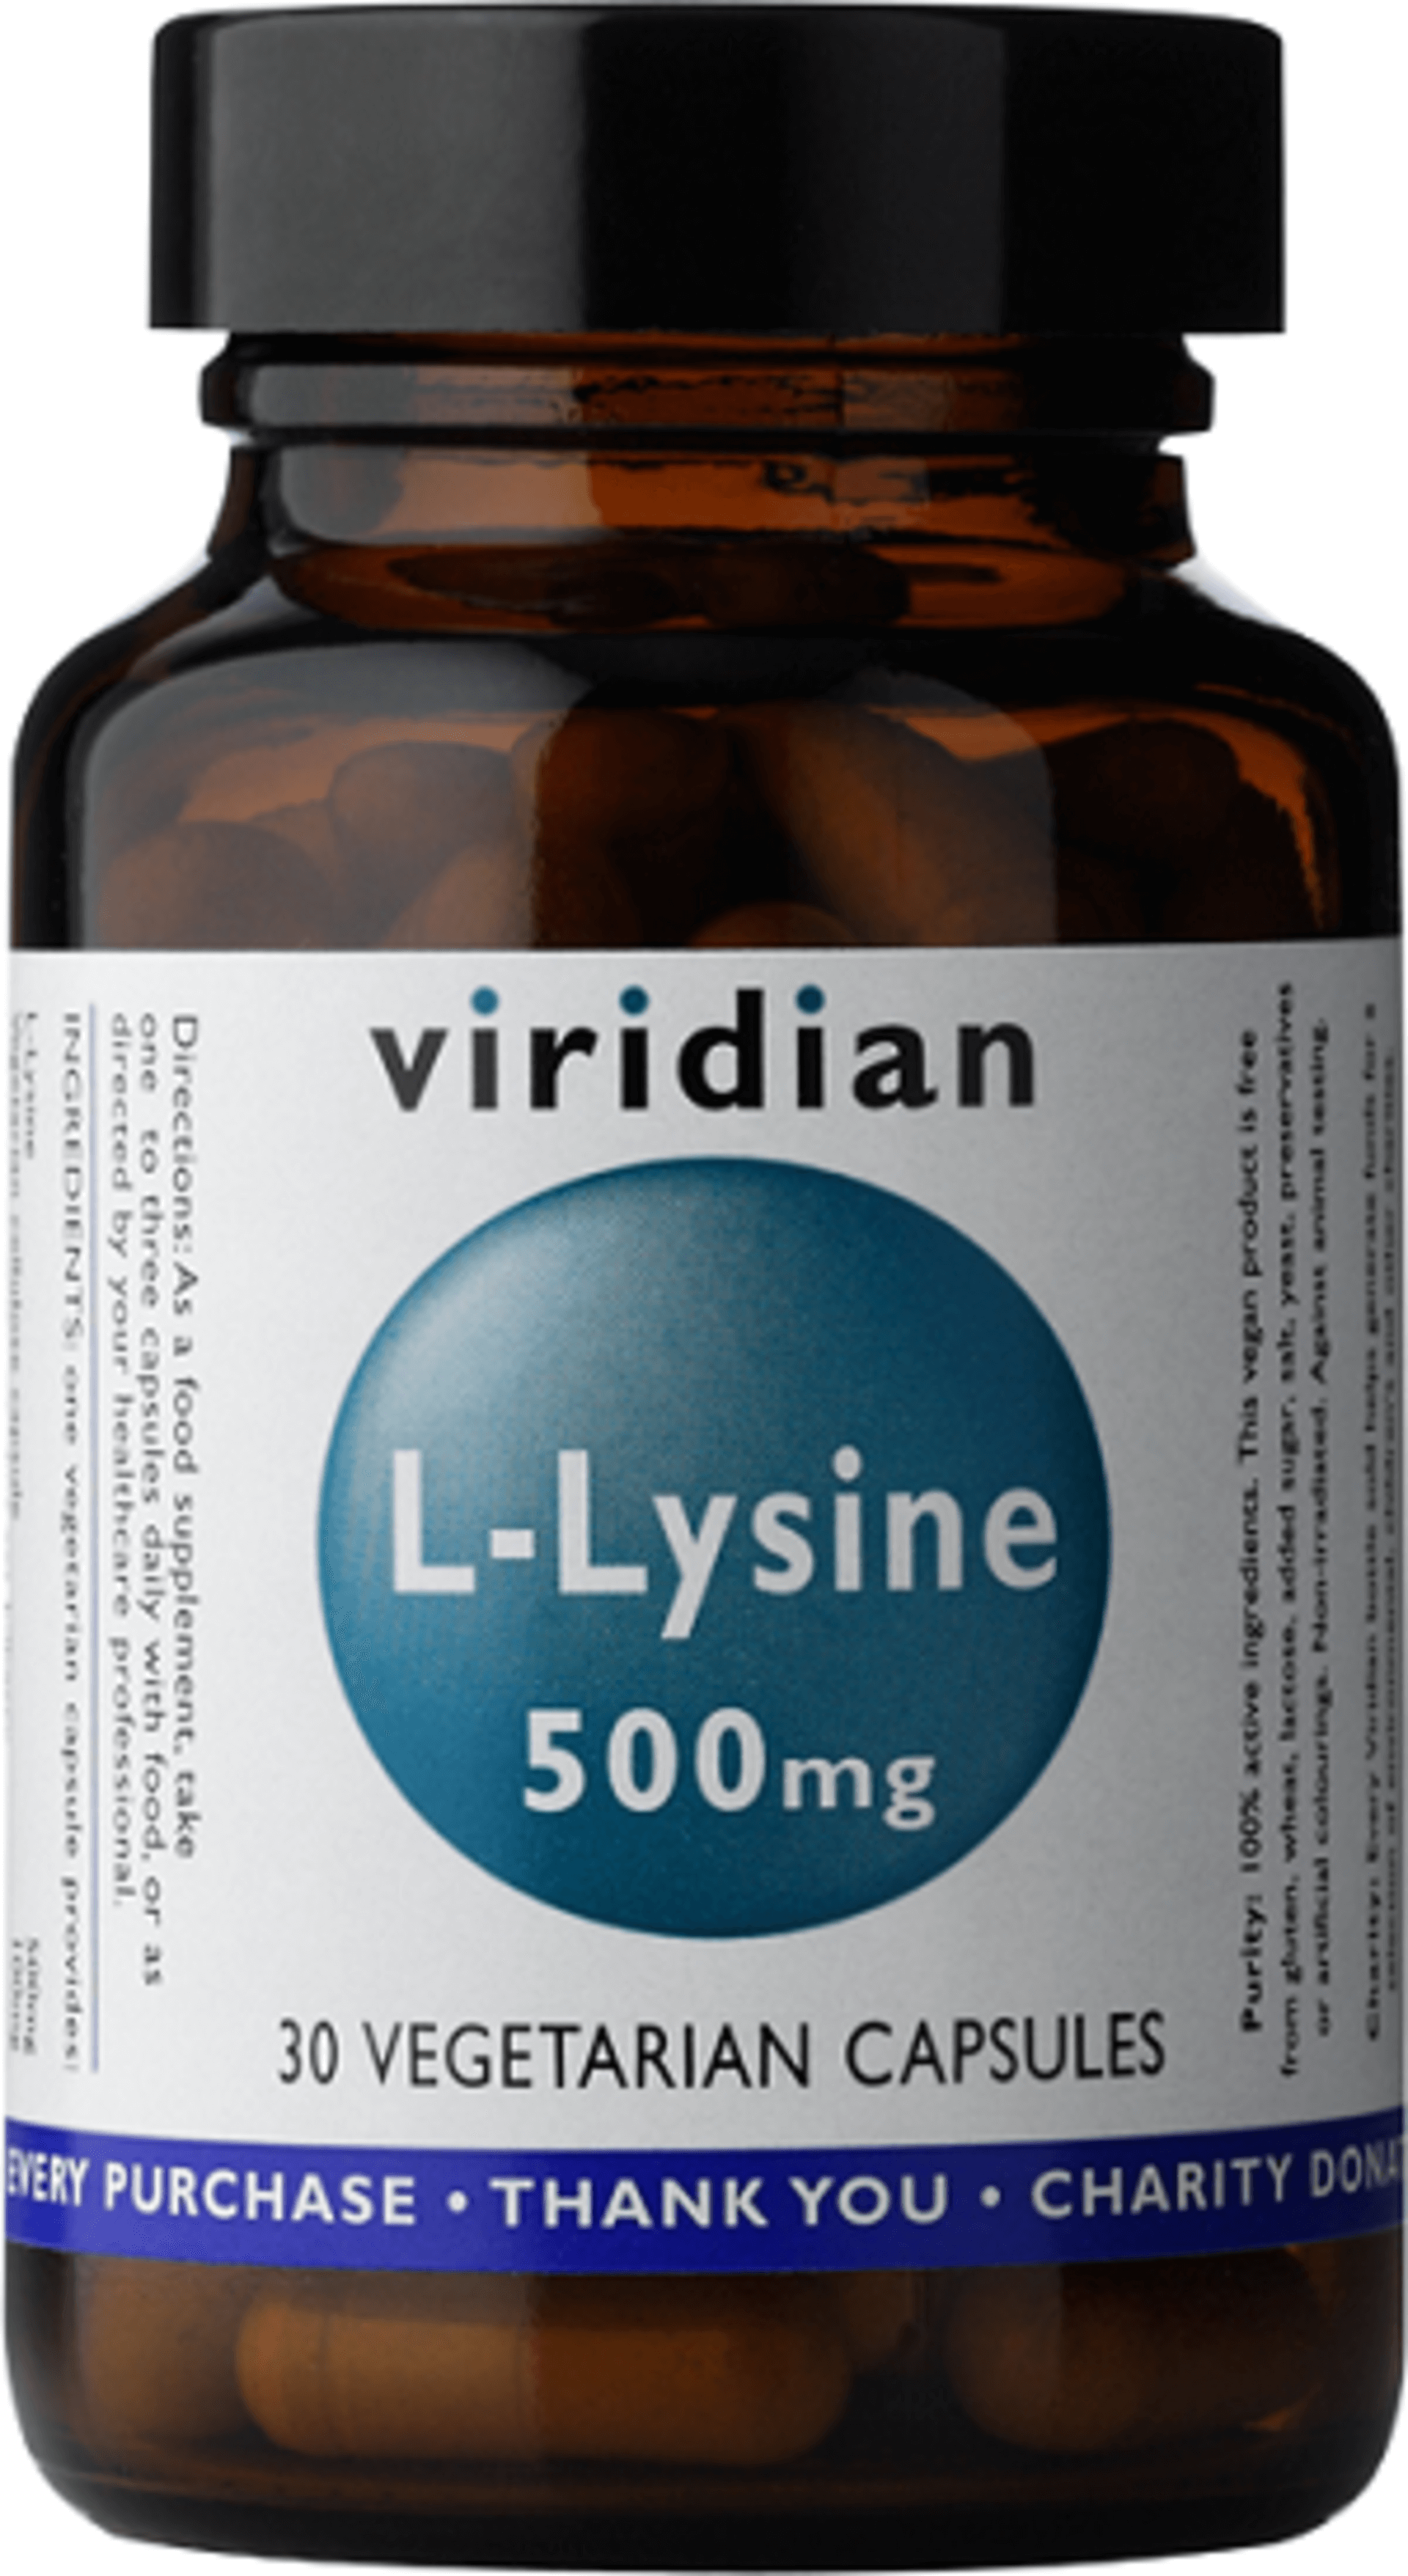 E-shop Viridian L-Lysine 90 kapslí